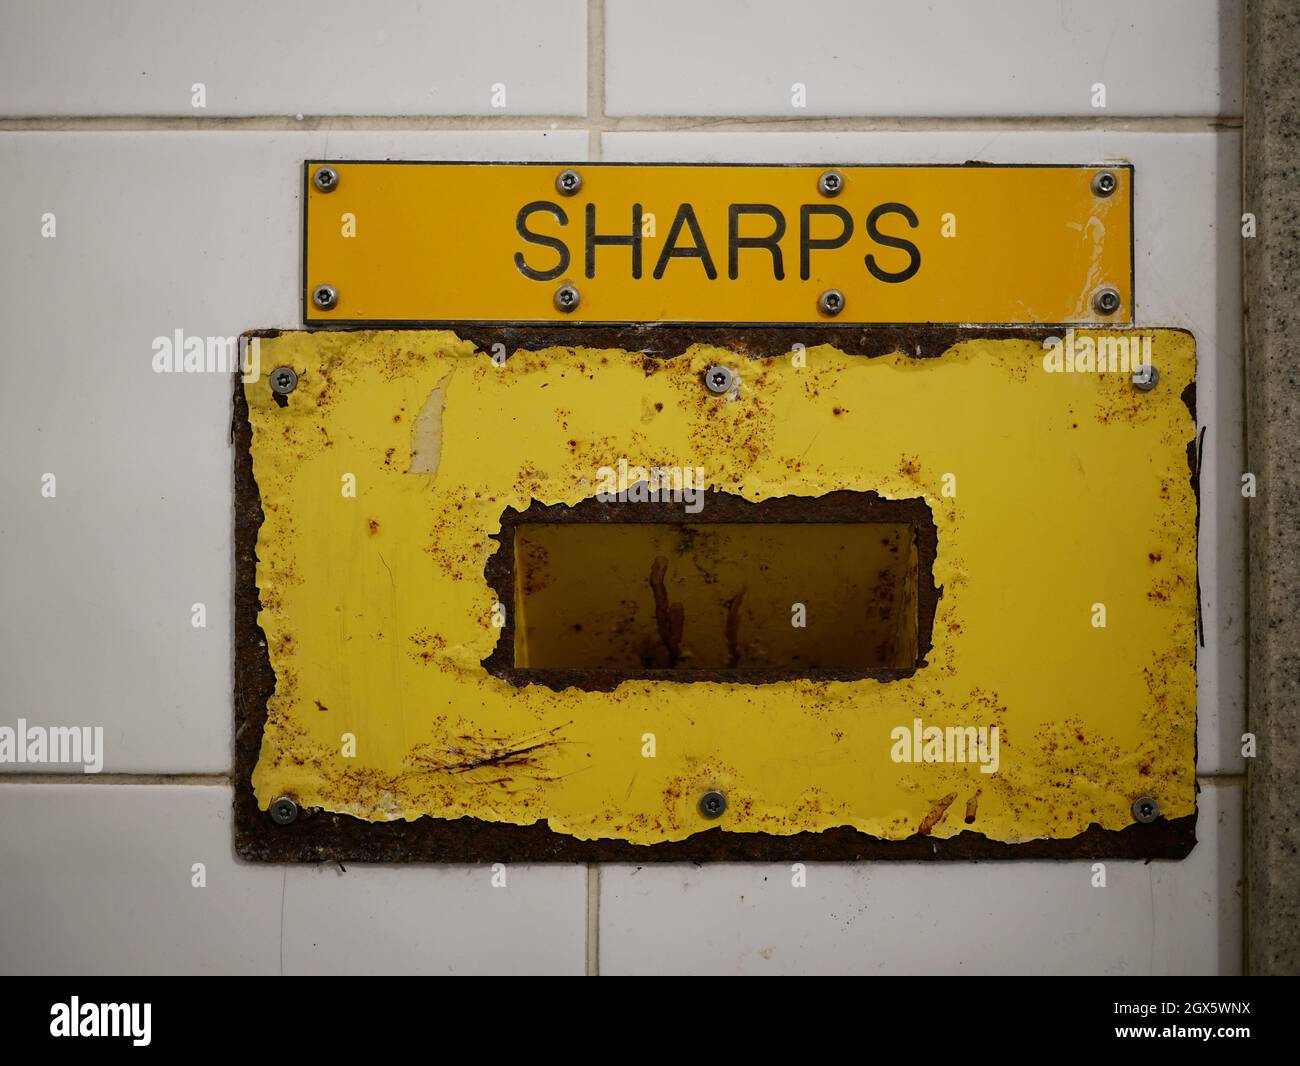 Sharps needle disposal bin in public toilet Stock Photo